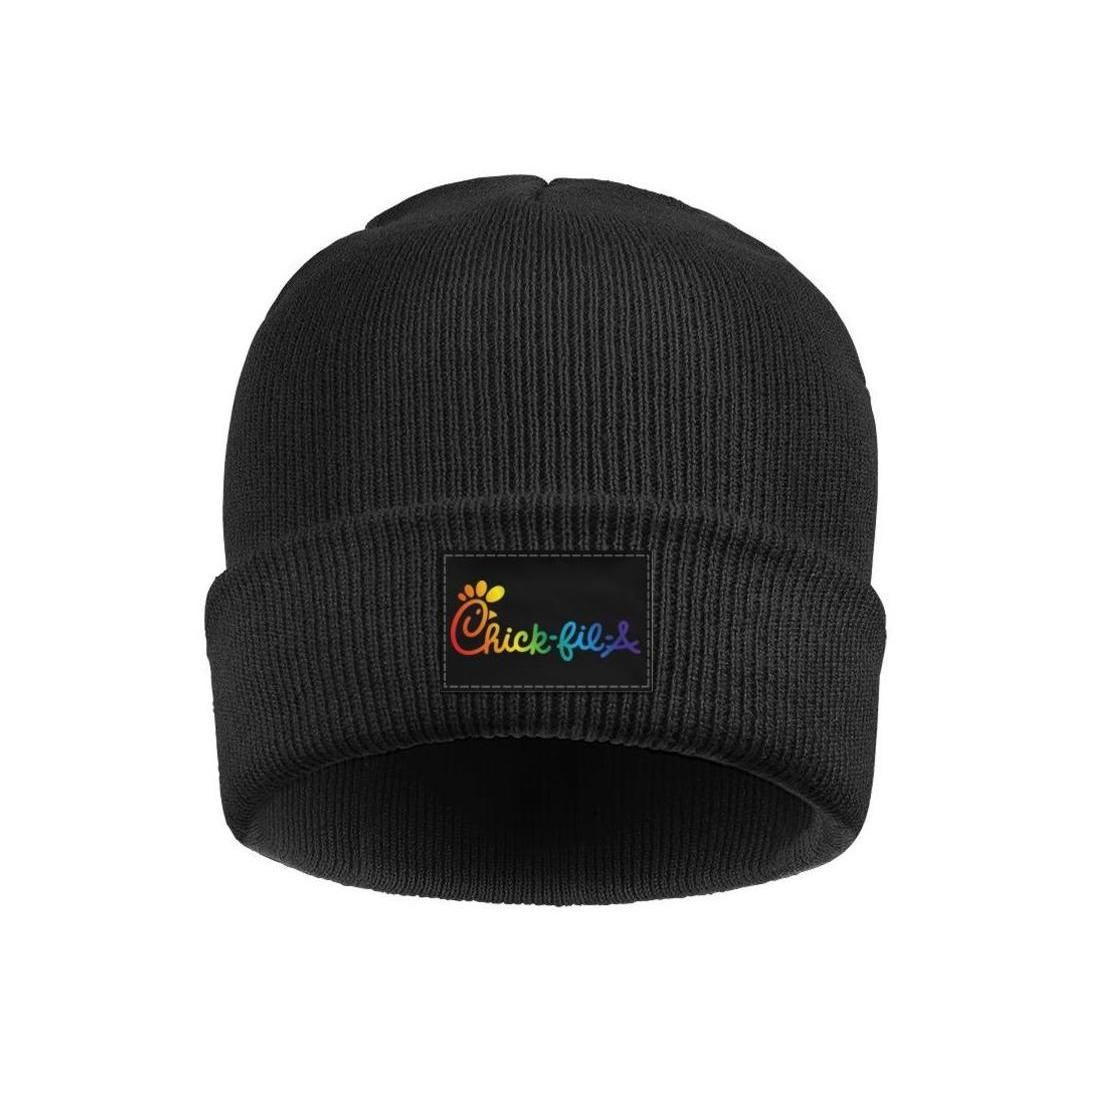 Skull Caps Fuck You Rainbow Winter Warm Knit Hats Stretchy Cuff Beanie Hat Black